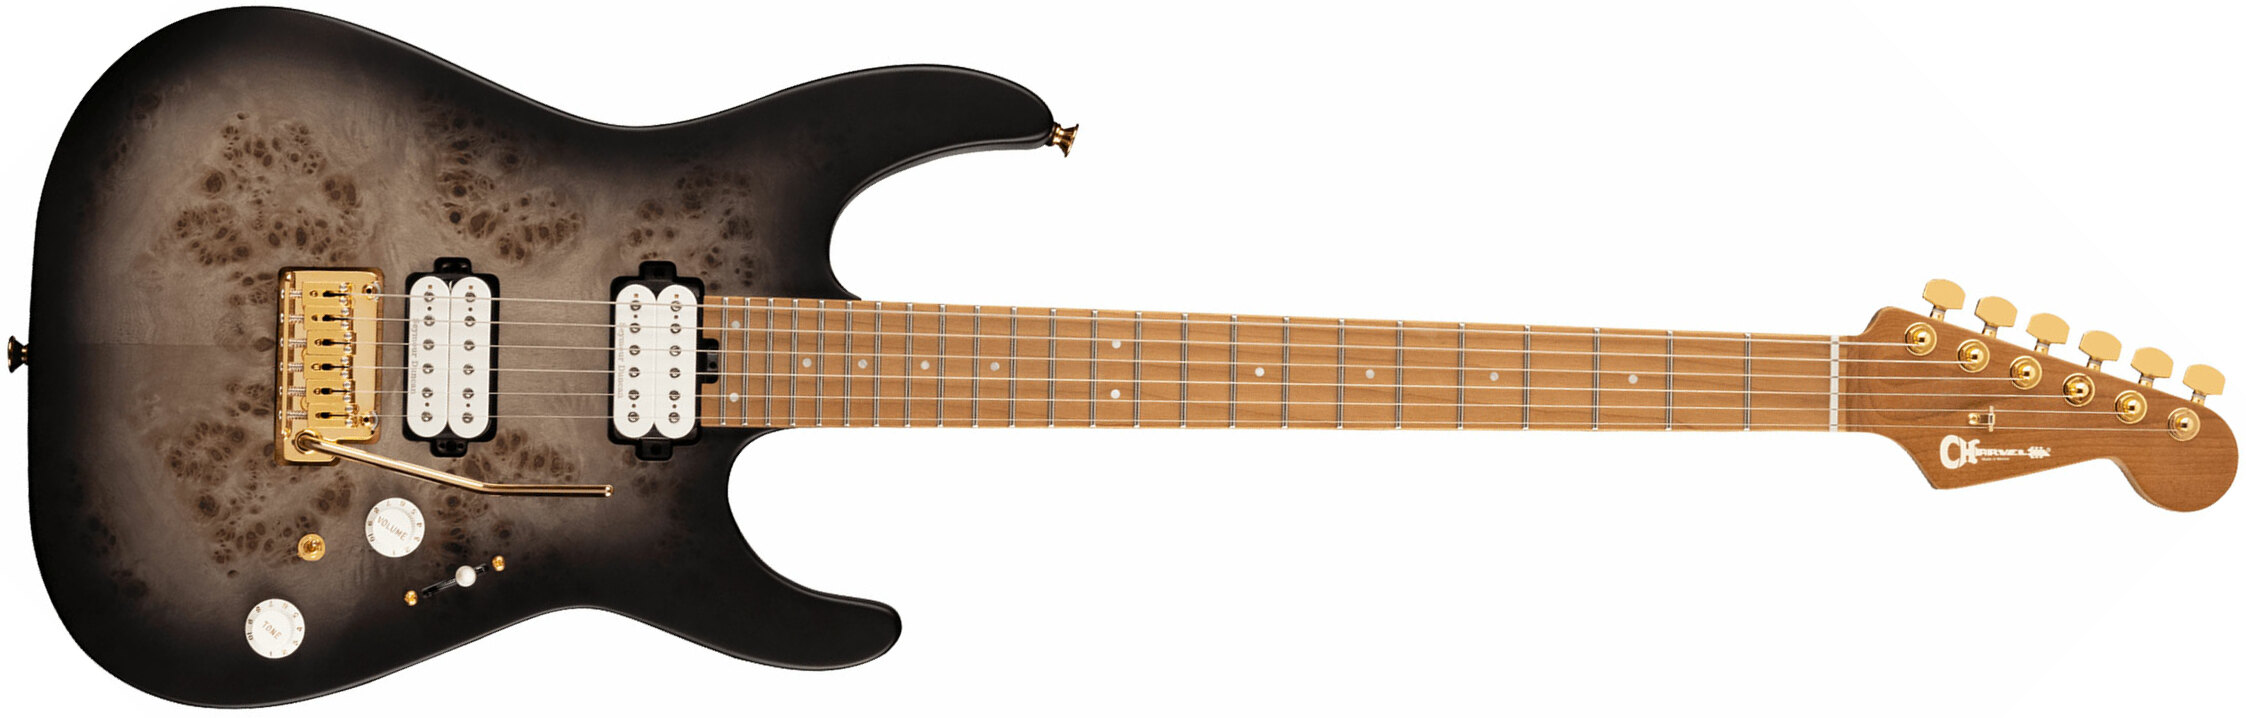 Charvel Dinky Dk24 Hh 2pt Cm Poplar Burl Pro-mod 2h Seymour Duncan Trem Mn - Transparent Black Burst - Elektrische gitaar in Str-vorm - Main picture